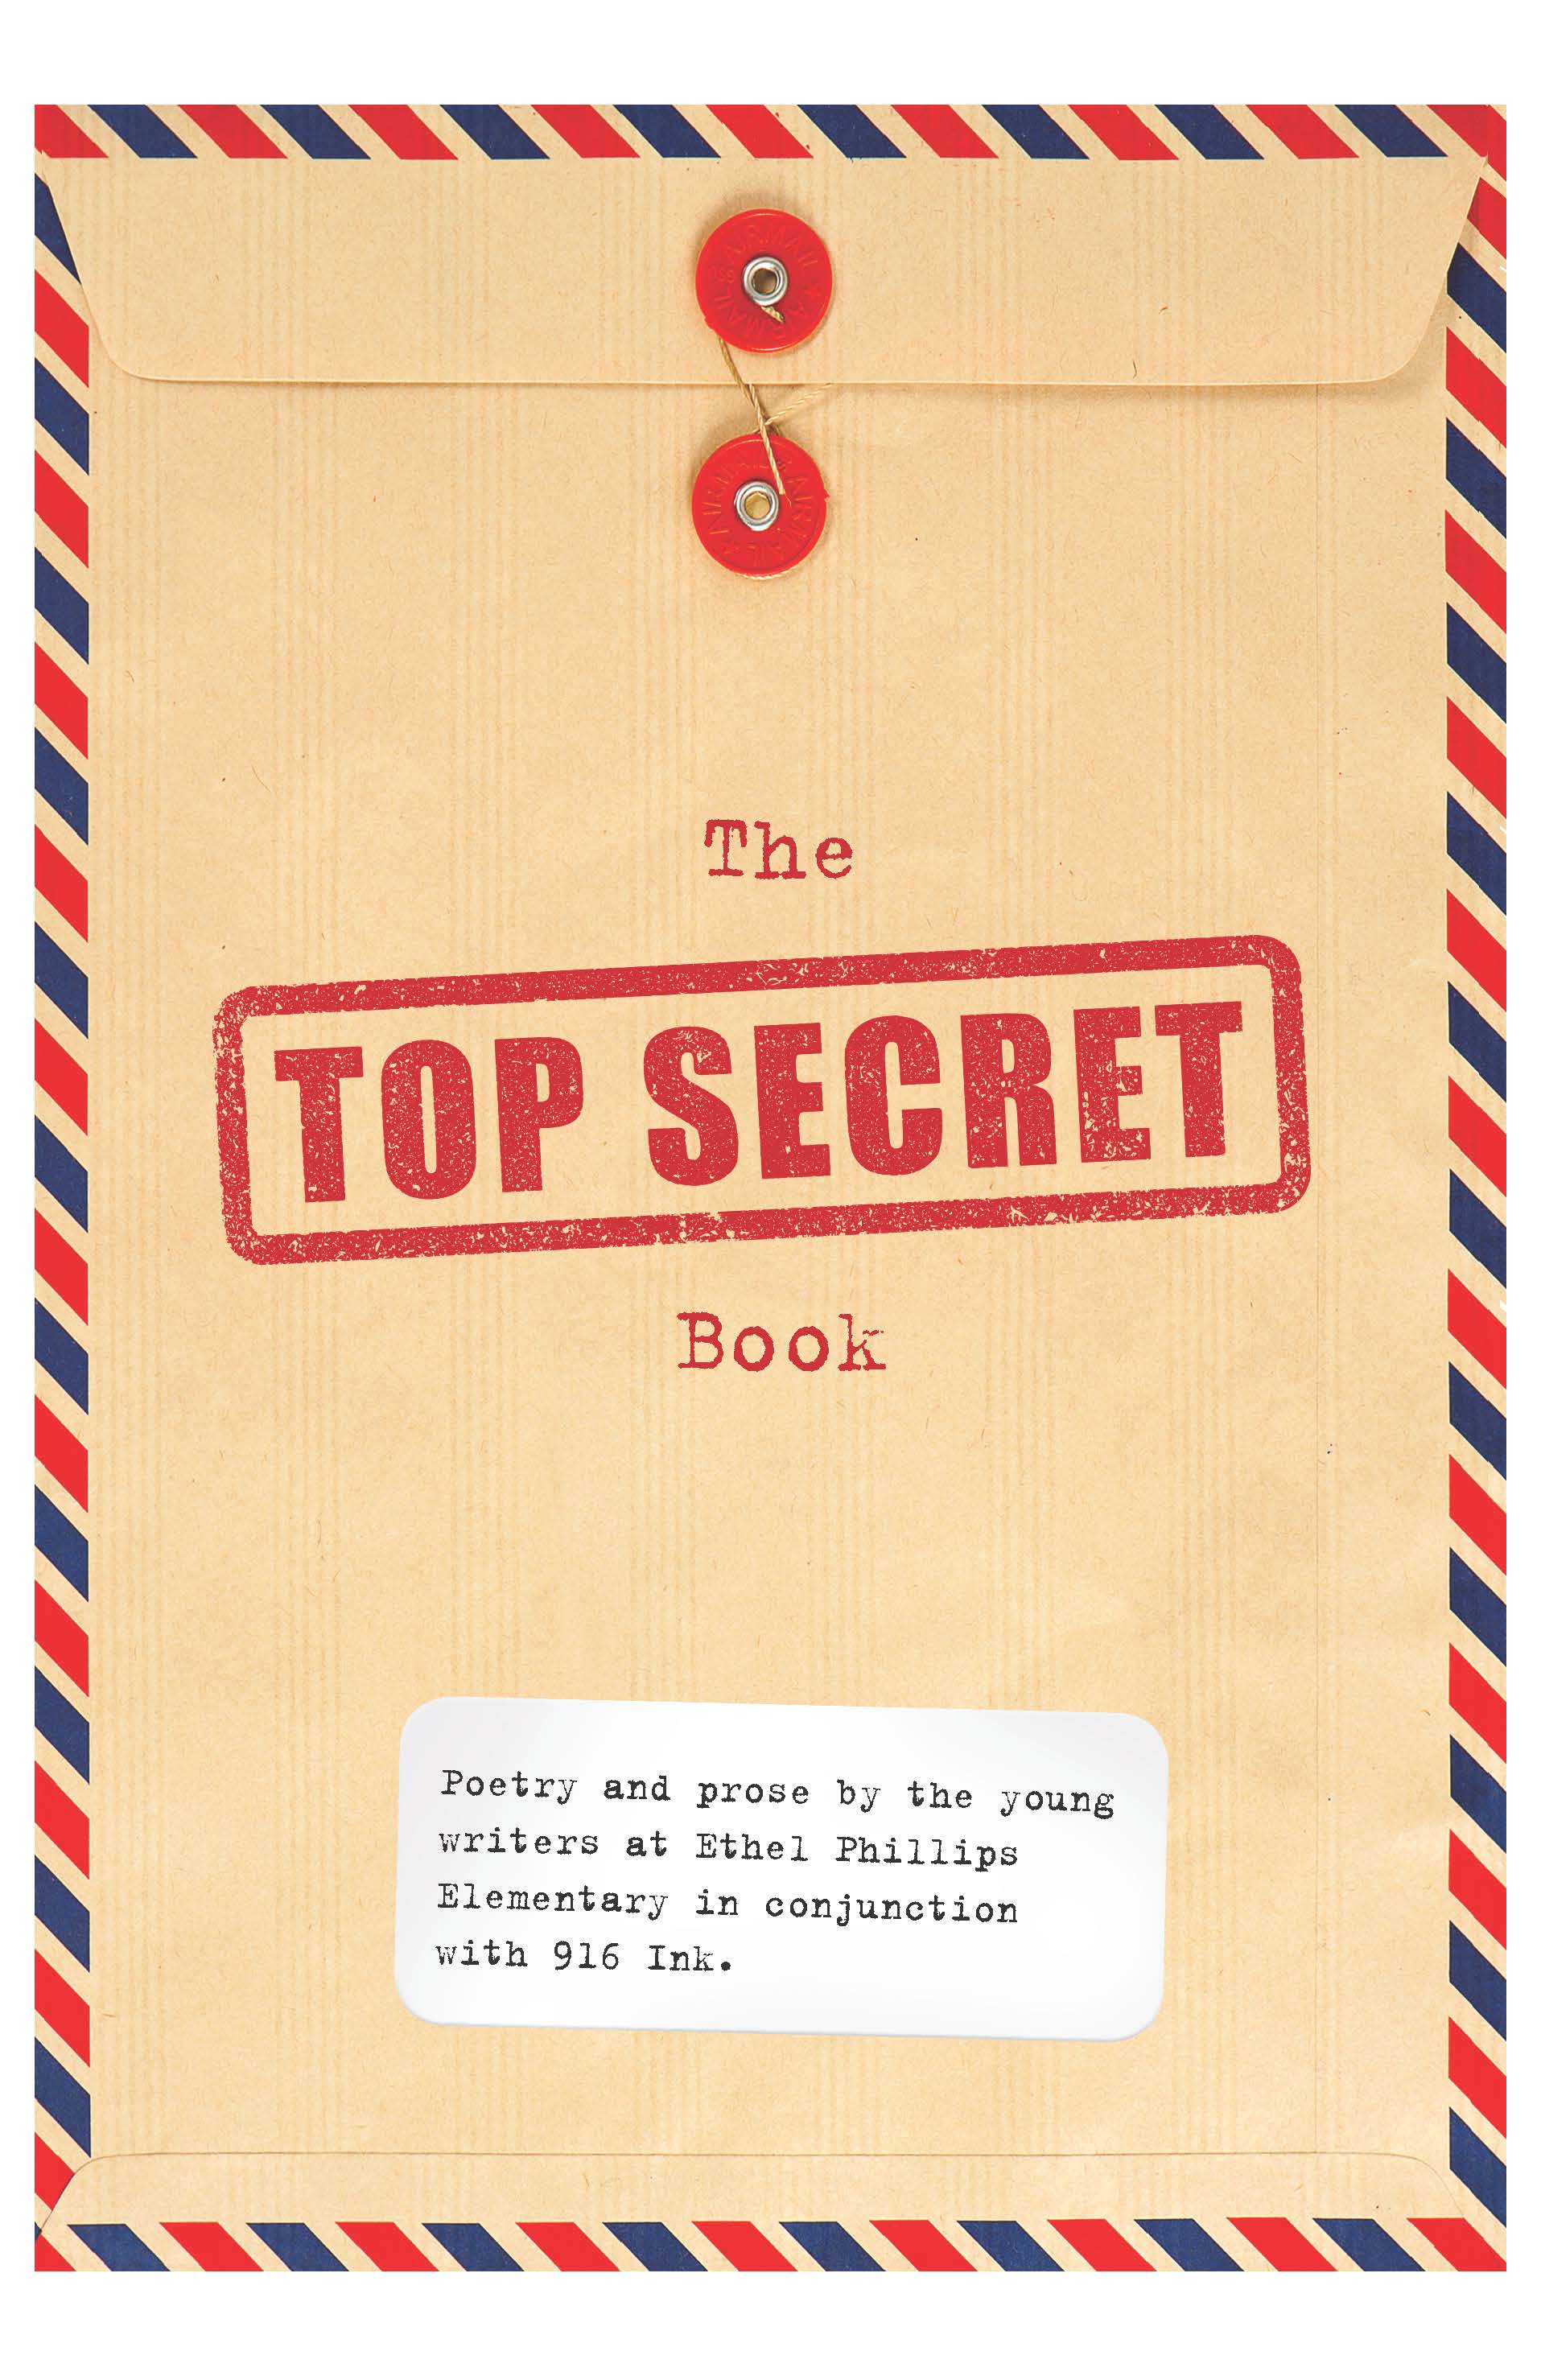 The Top Secret Book — 916 Ink